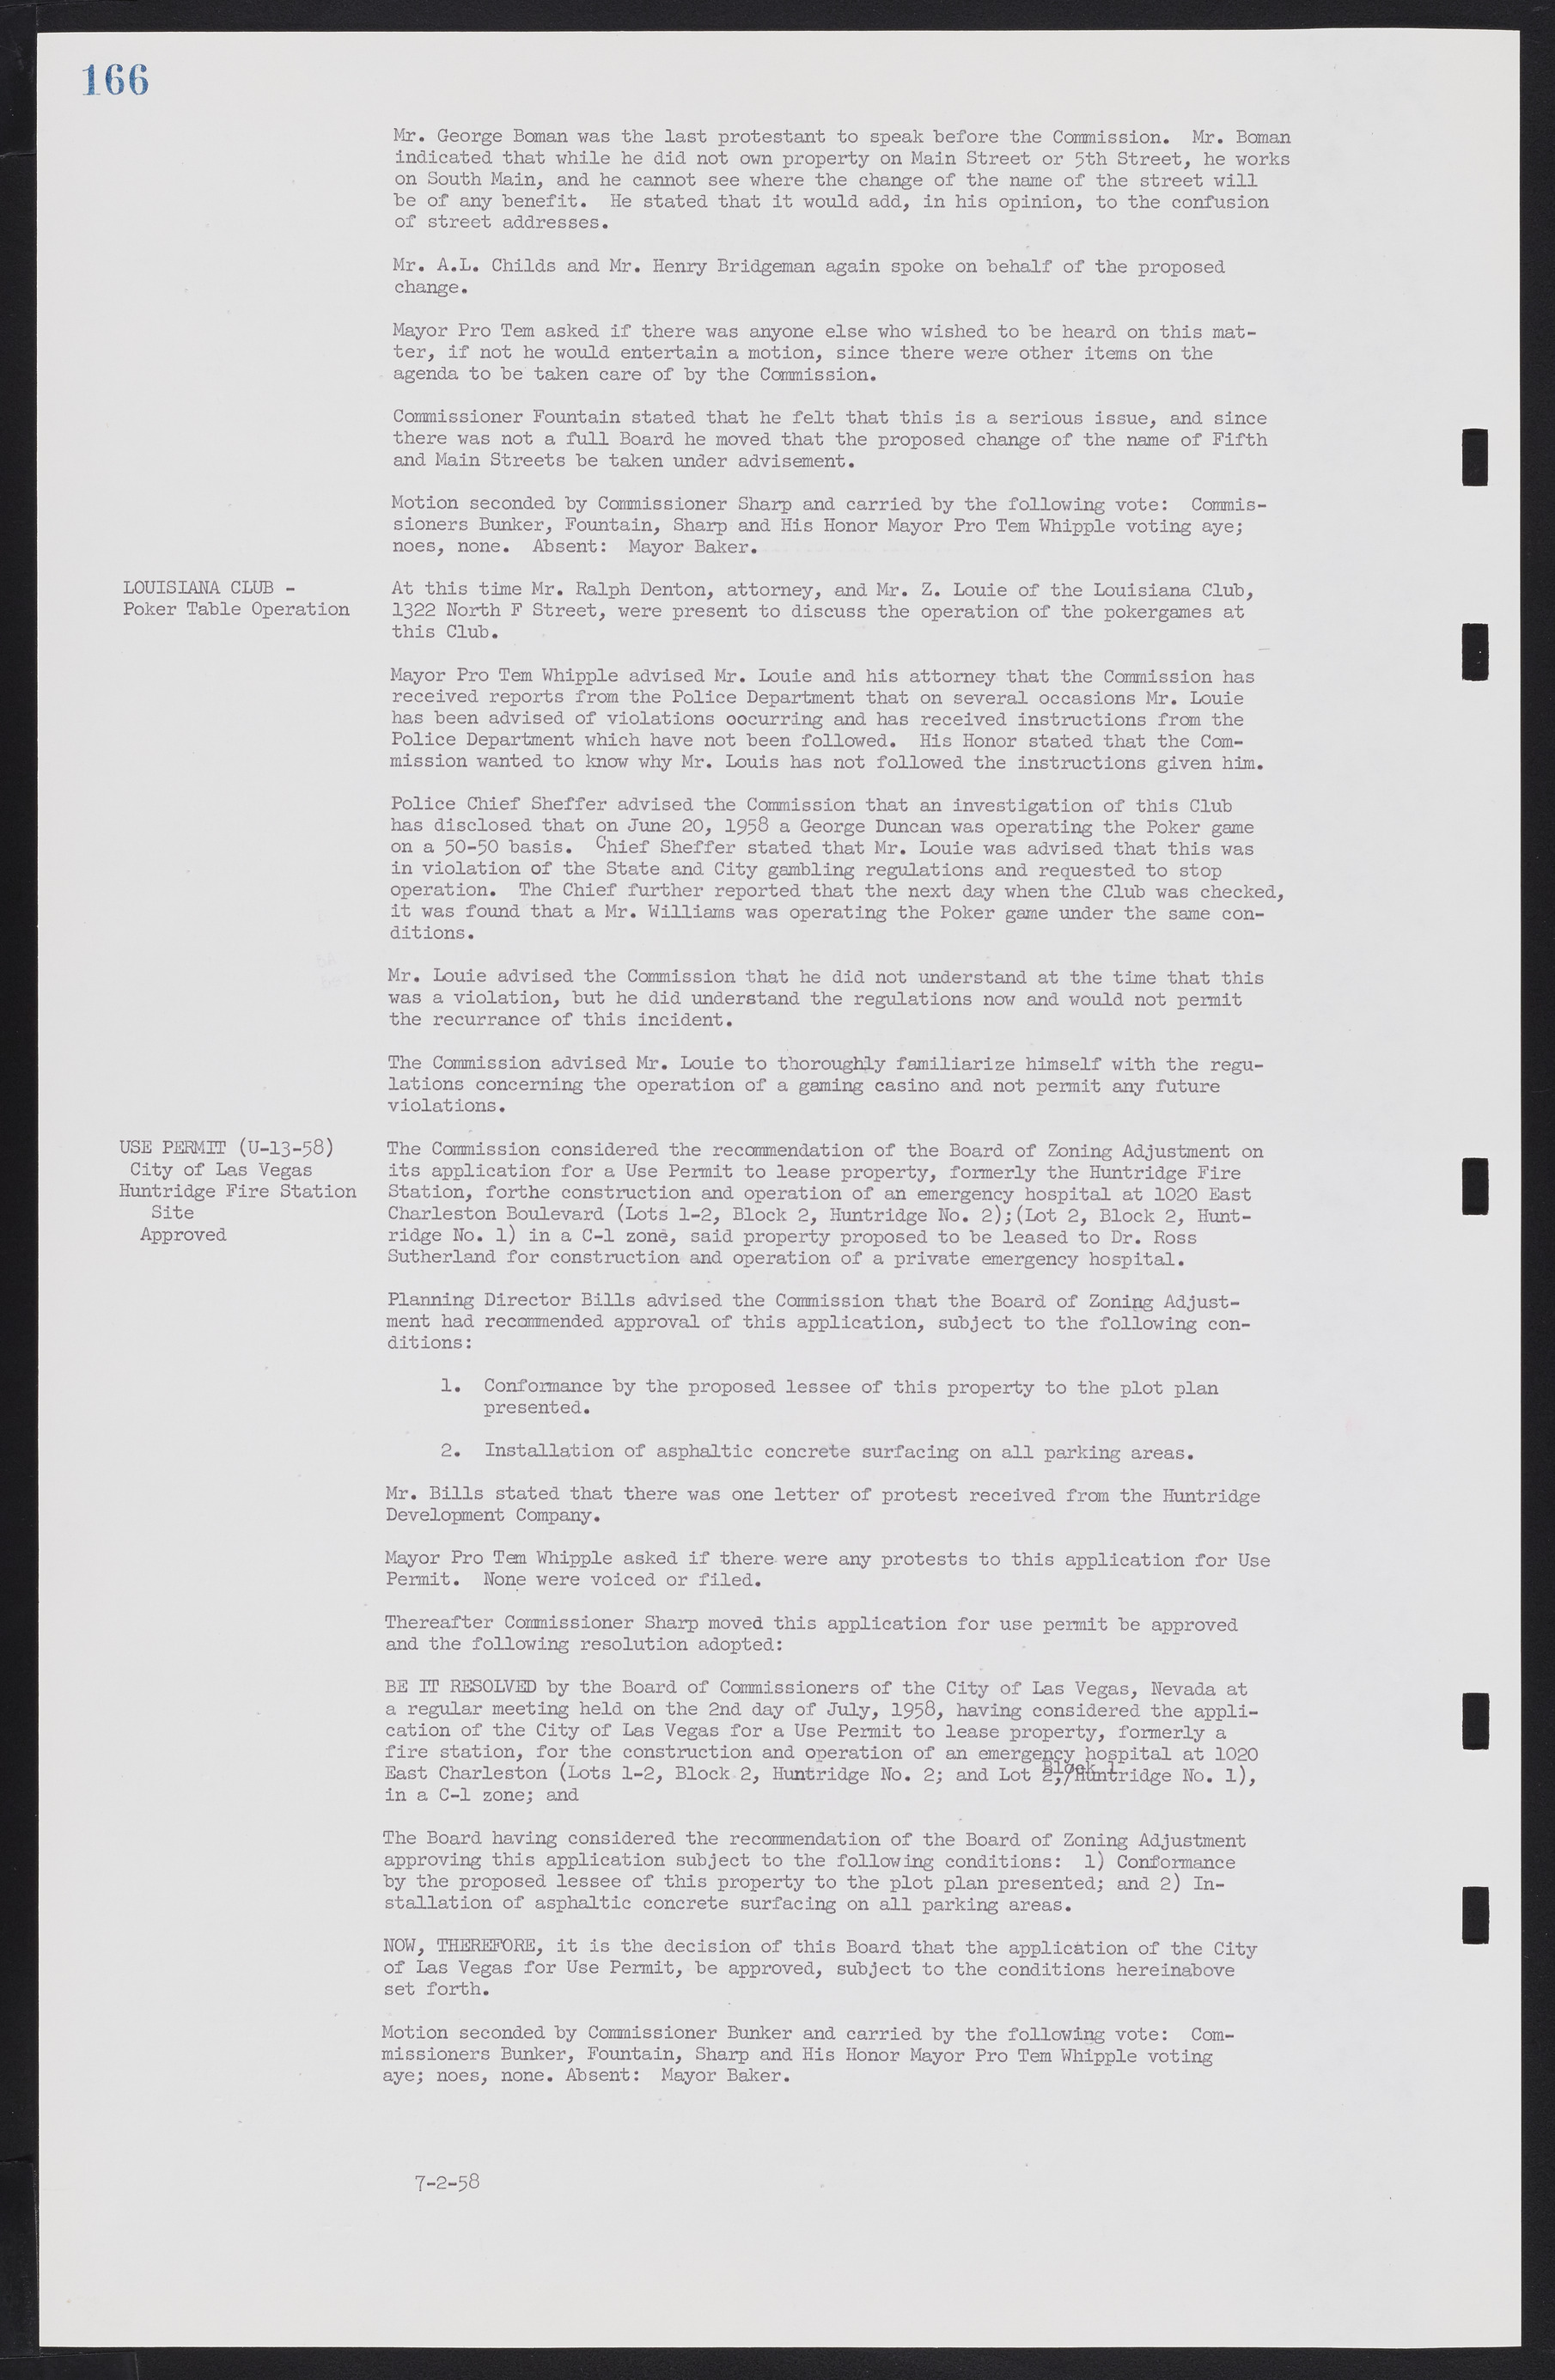 Las Vegas City Commission Minutes, November 20, 1957 to December 2, 1959, lvc000011-170